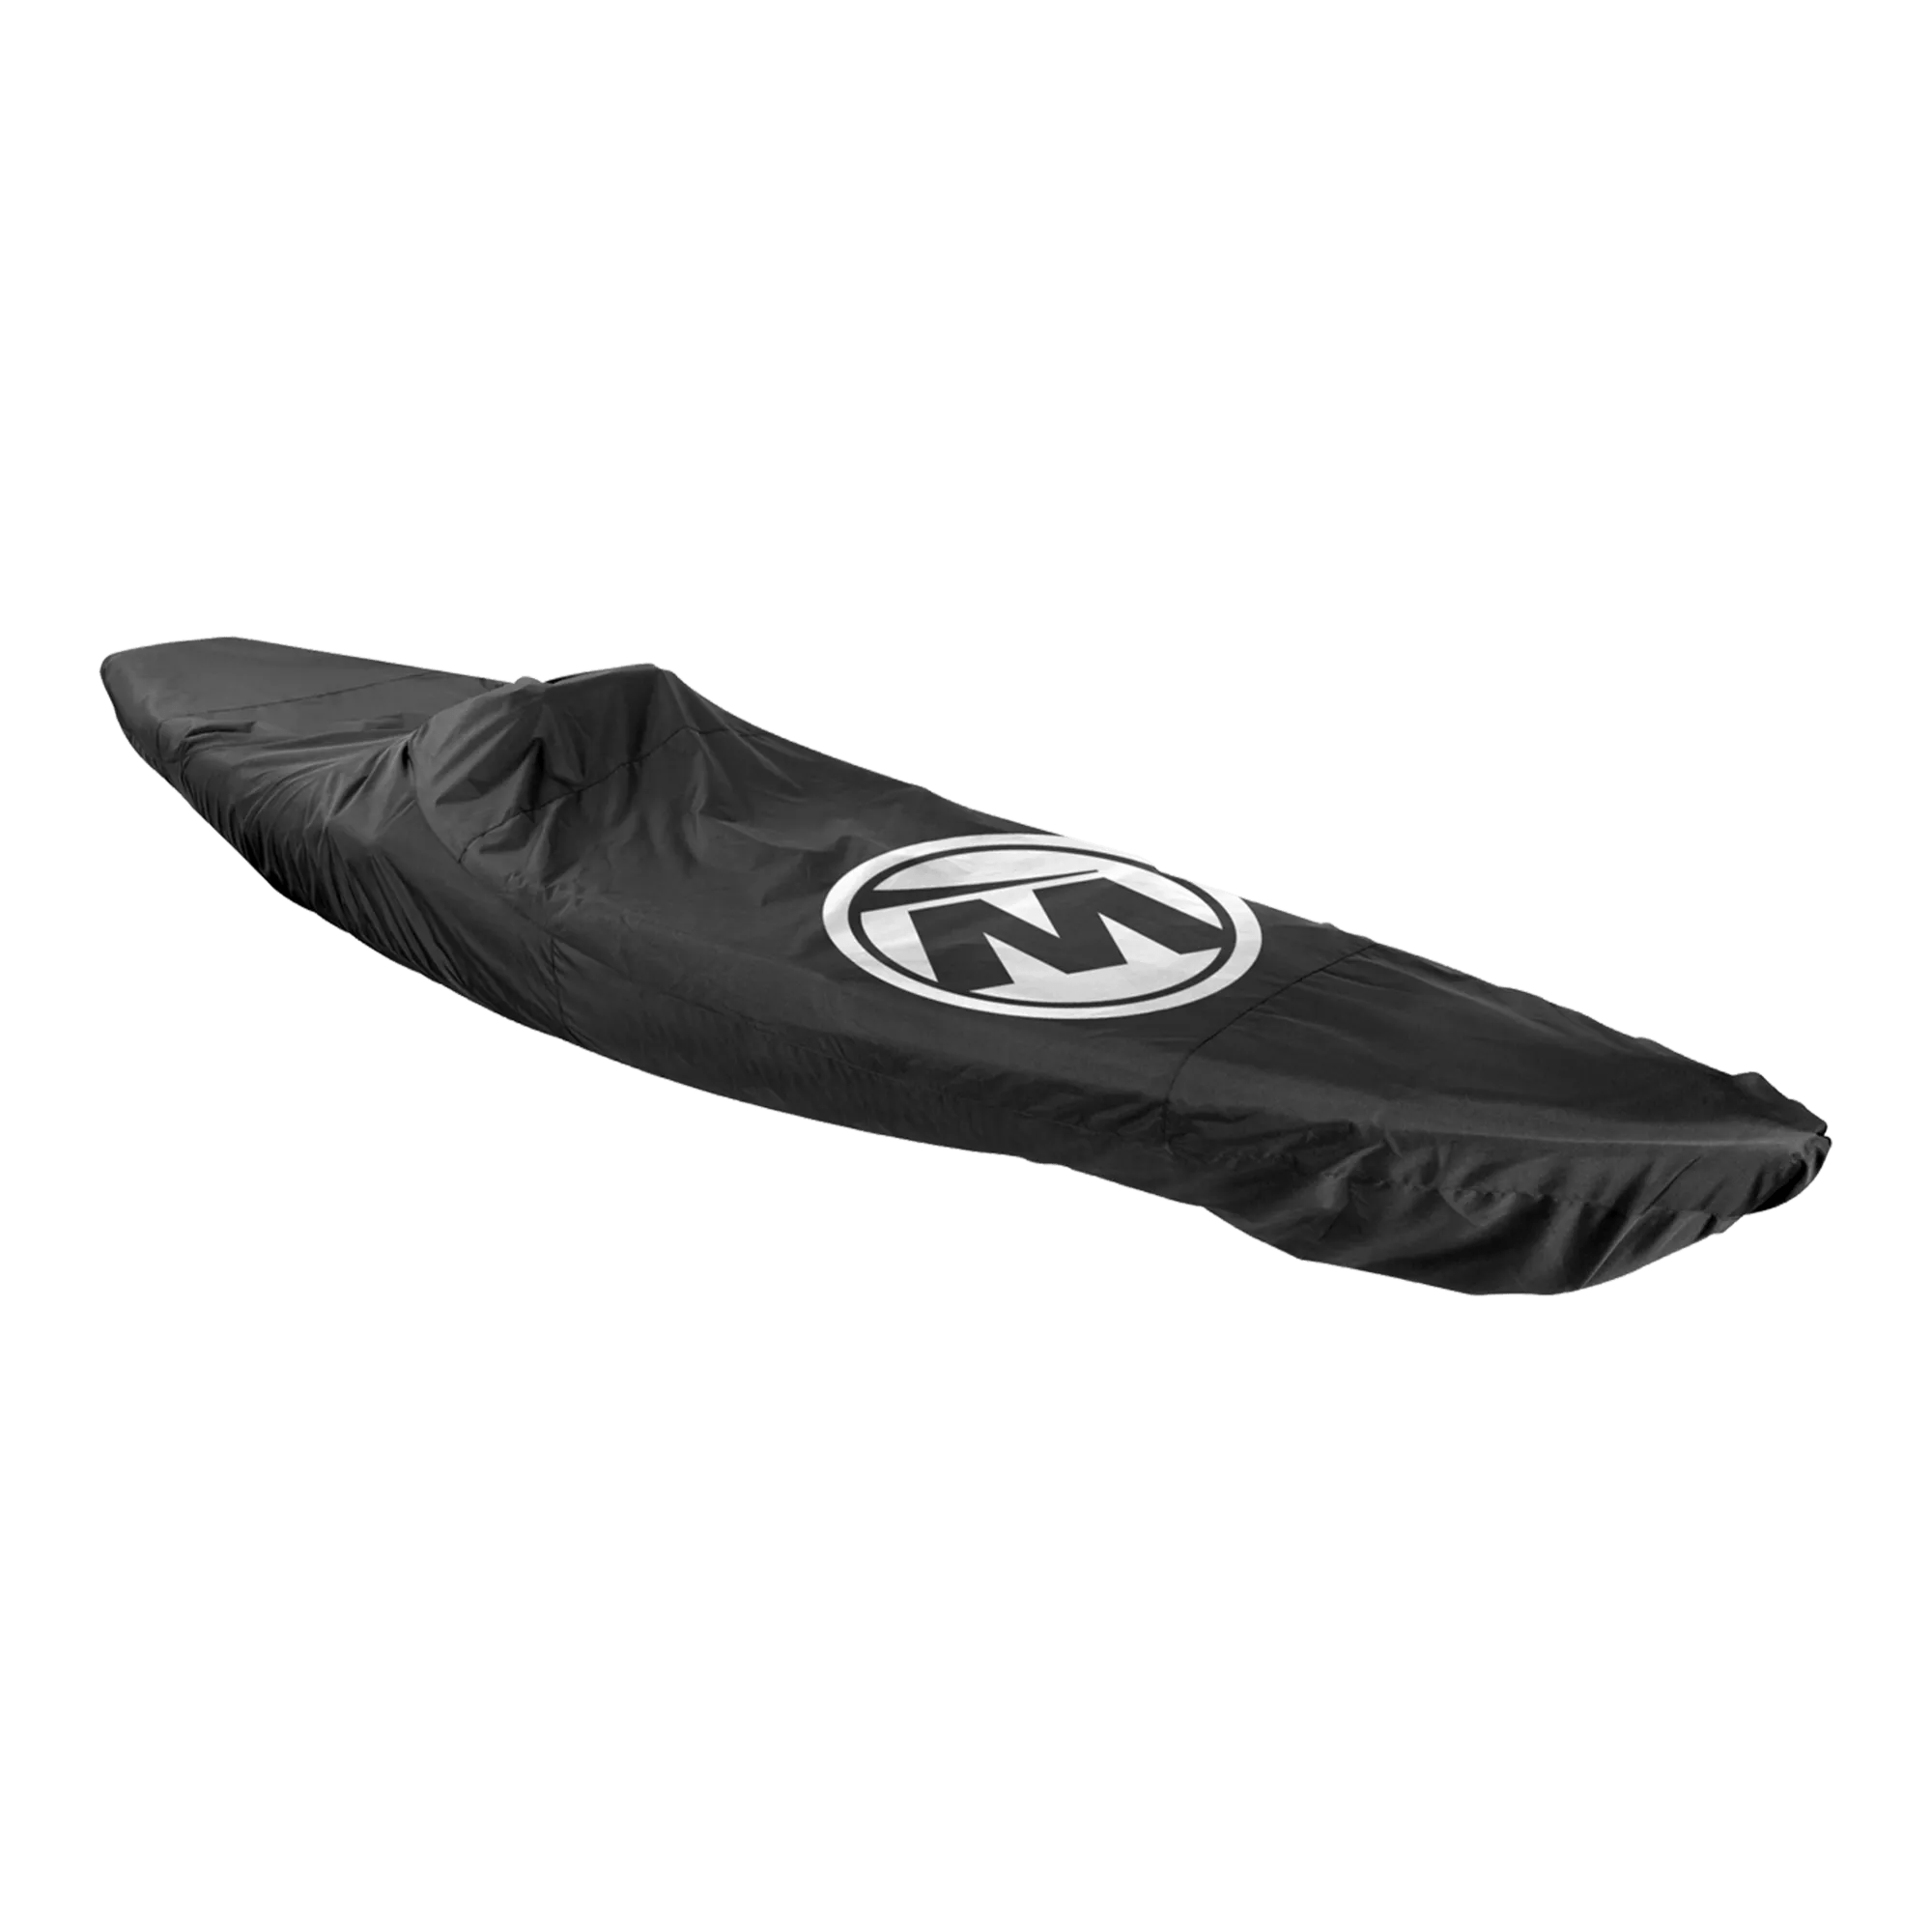 WILDERNESS SYSTEMS - Housse résistante pour les kayaks ouverts – M - Black - 8070232 - ISO 